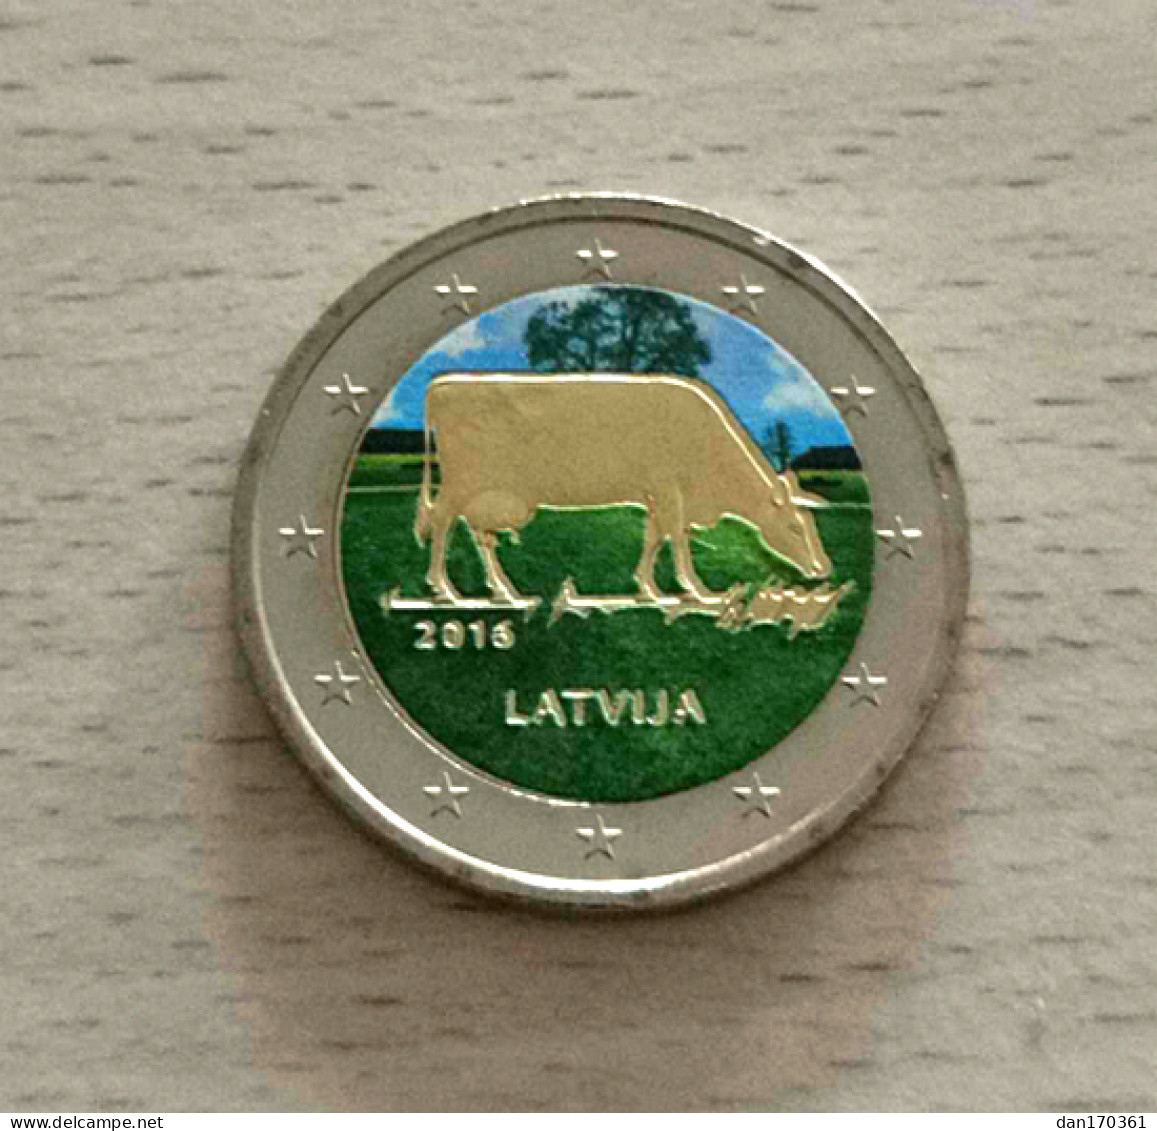 LETTONIE 2016 - INDUSTRIE LAITIERE VACHE BRUNE -  2 EURO COMMEMORATIVE - COULEUR - FARBE - COLORED - COLOR - COLORISEE - Lettland